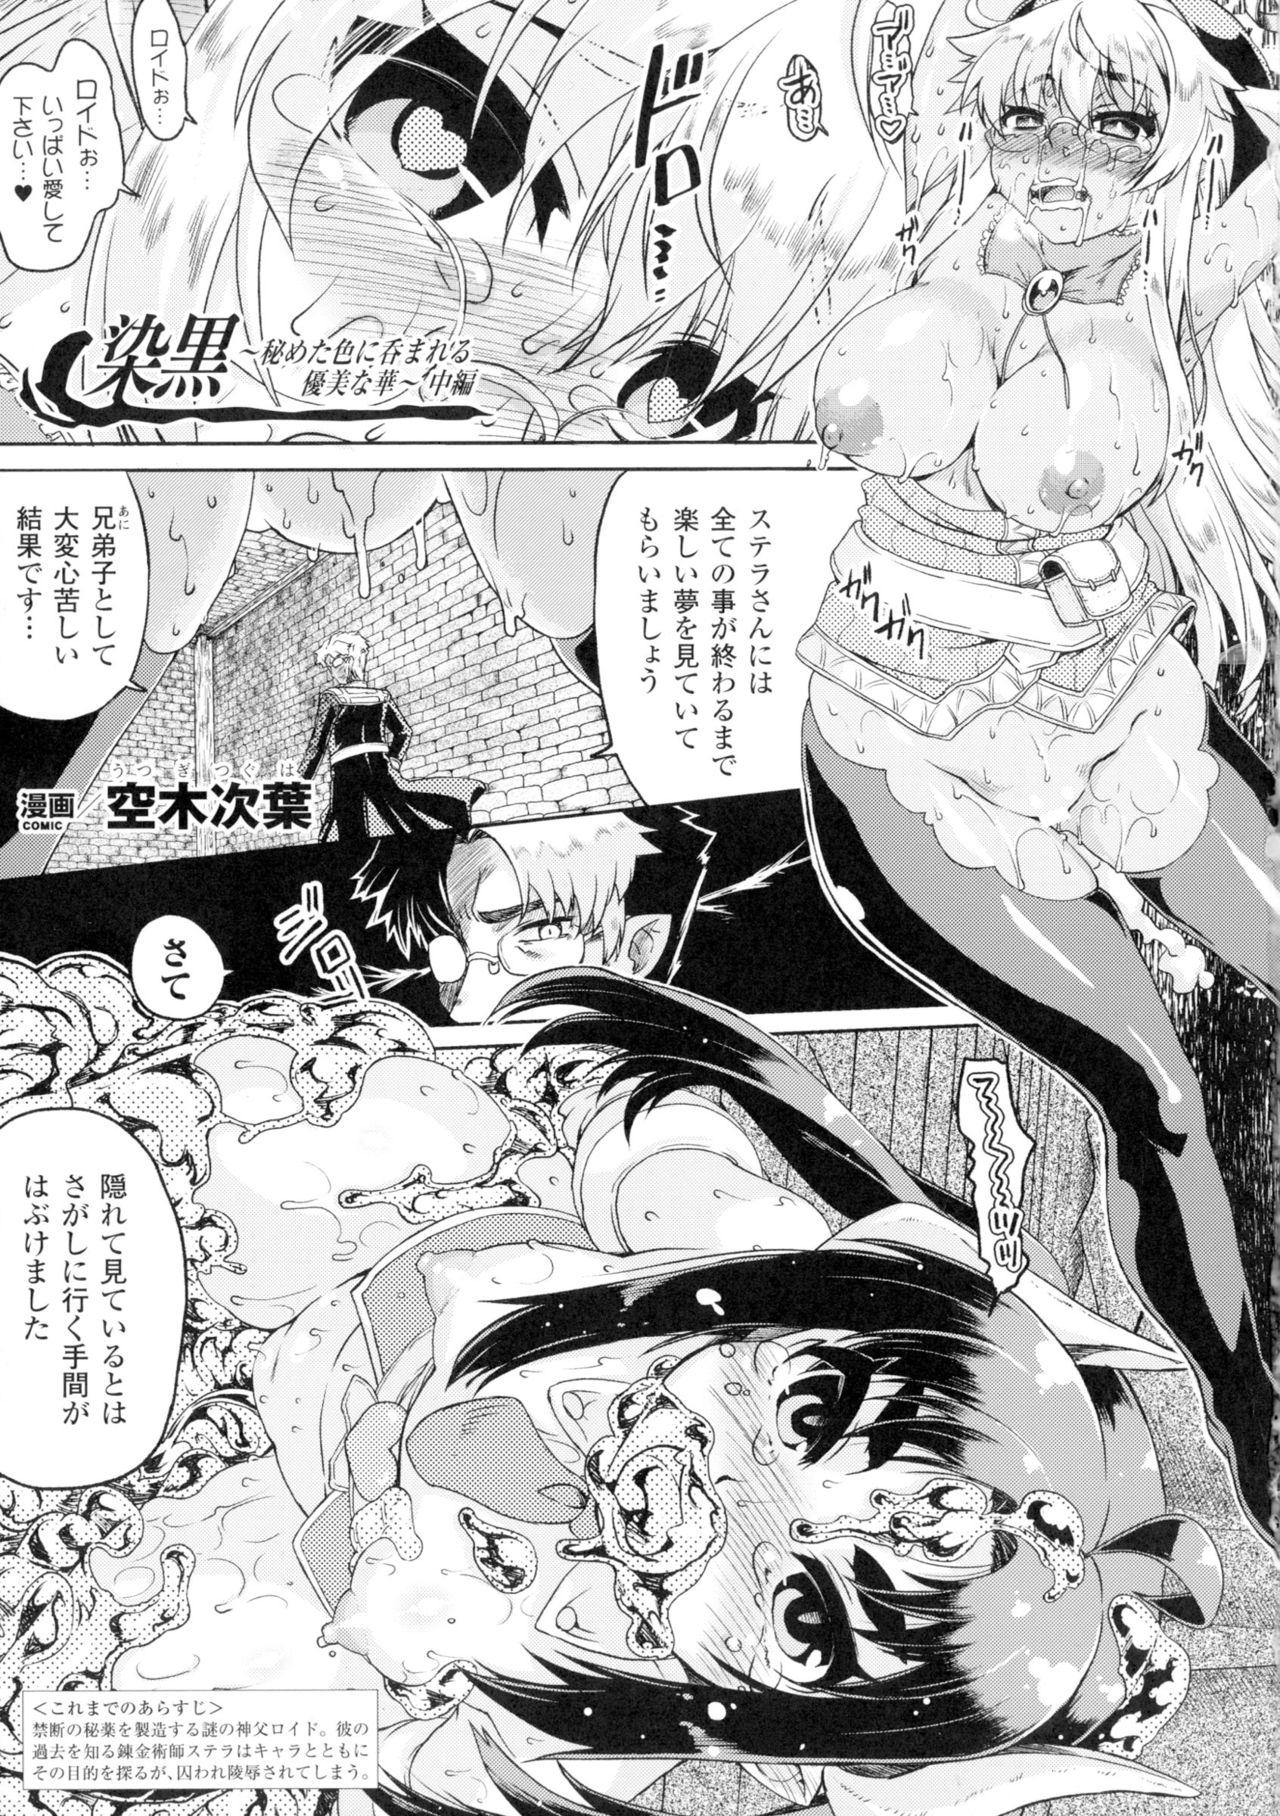 Seigi no Heroine Kangoku File DX Vol. 2 193